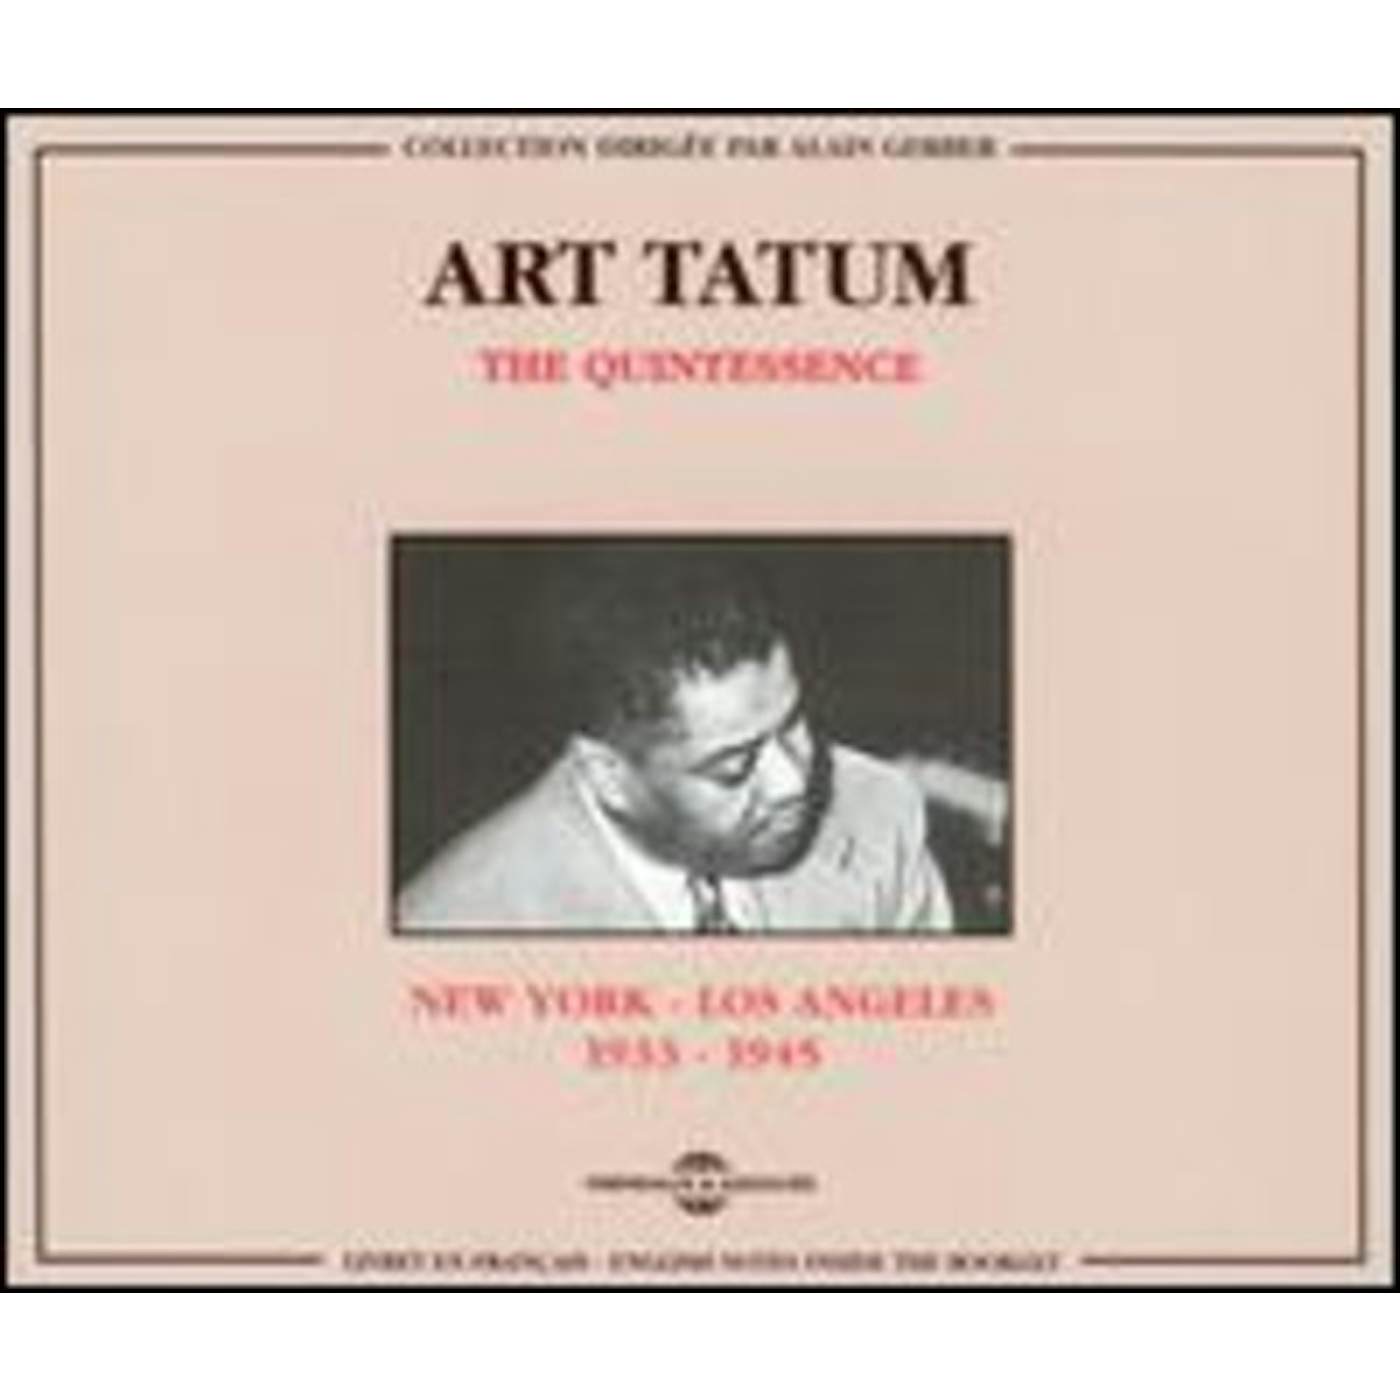 Art Tatum NEW YORK TO LOS ANGELES 1939-1945 CD